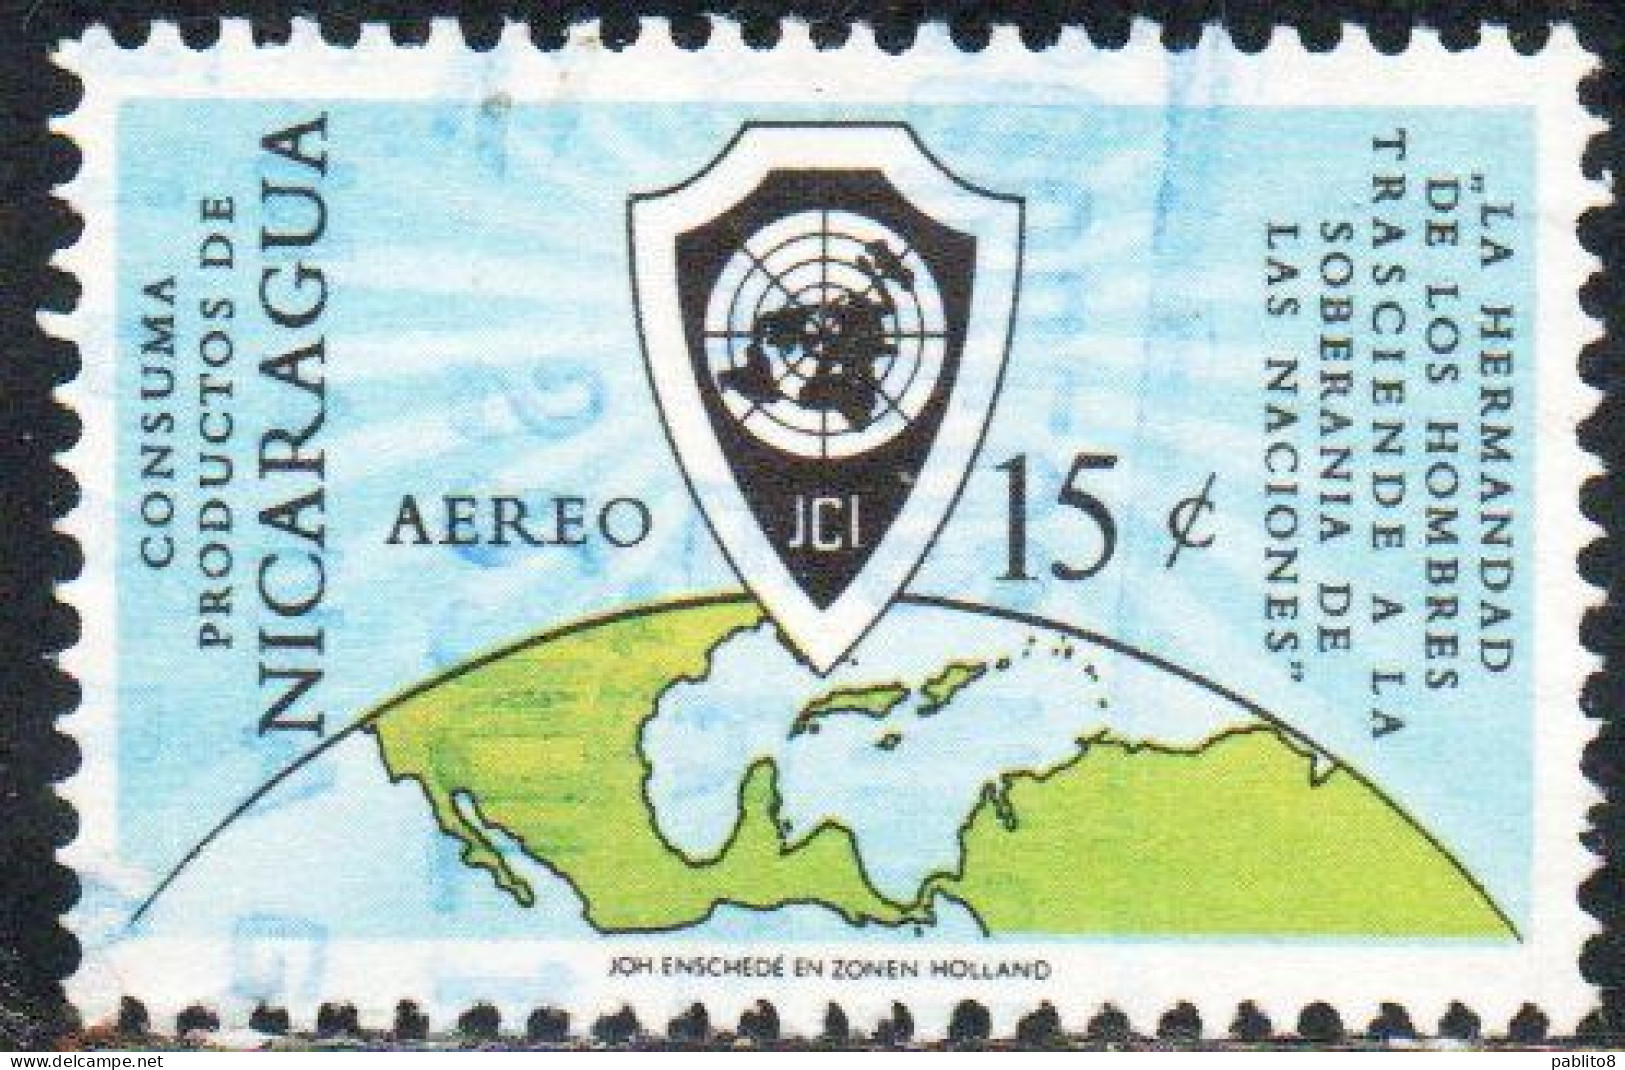 NICARAGUA 1961 JCI JUNIOR CHAMBER OF COMMERCE EMBLEM 15c USED USATO OBLITERE' - Nicaragua